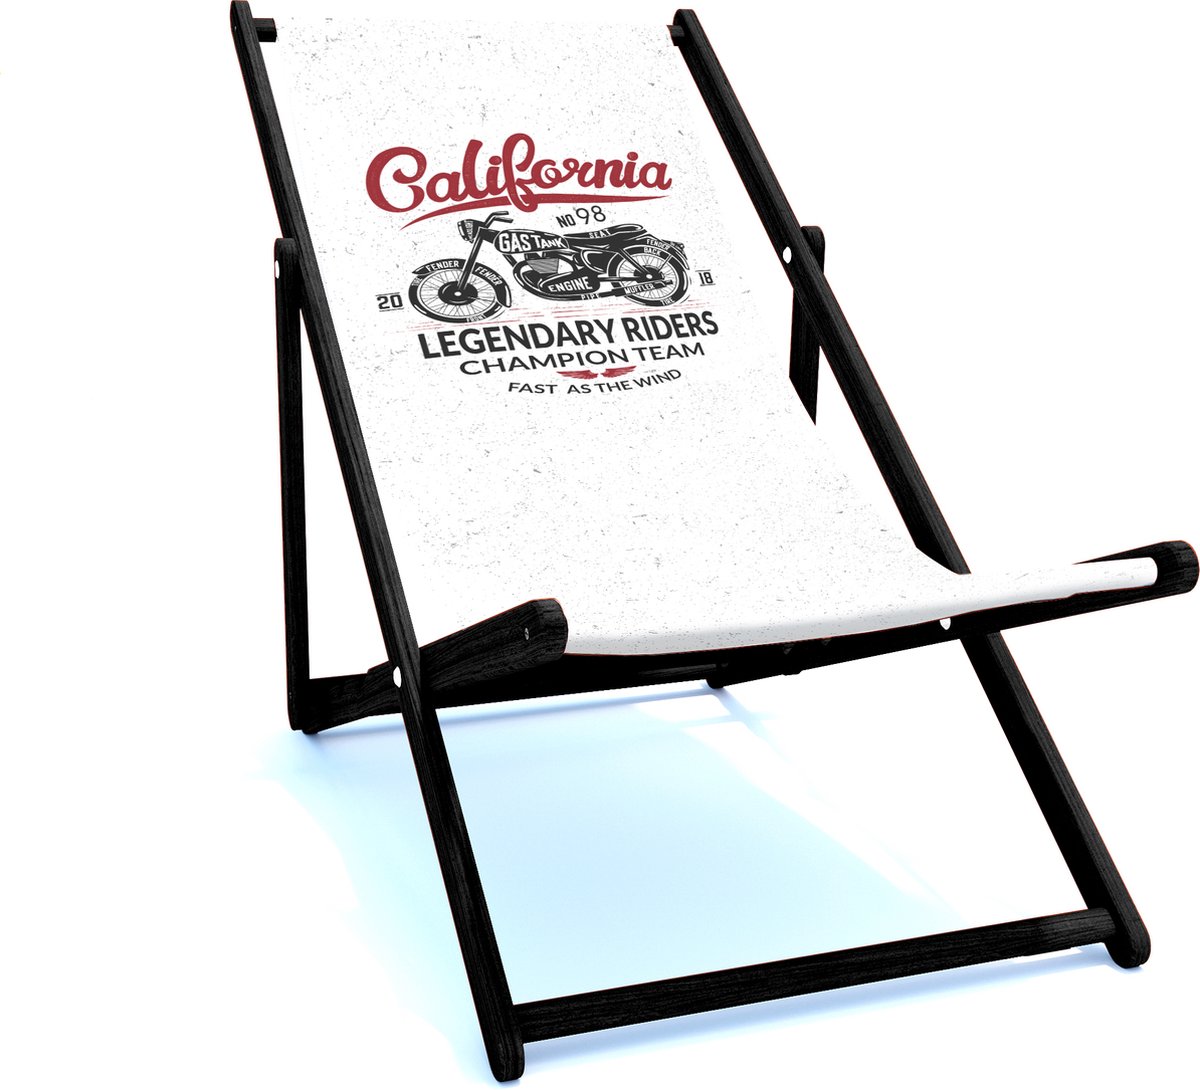 Holtaz Strandstoel Hout Inklapbaar Comfortabele Zonnebed Ligbed met verstelbare Lighoogte met stoffen Motors zwart houten frame